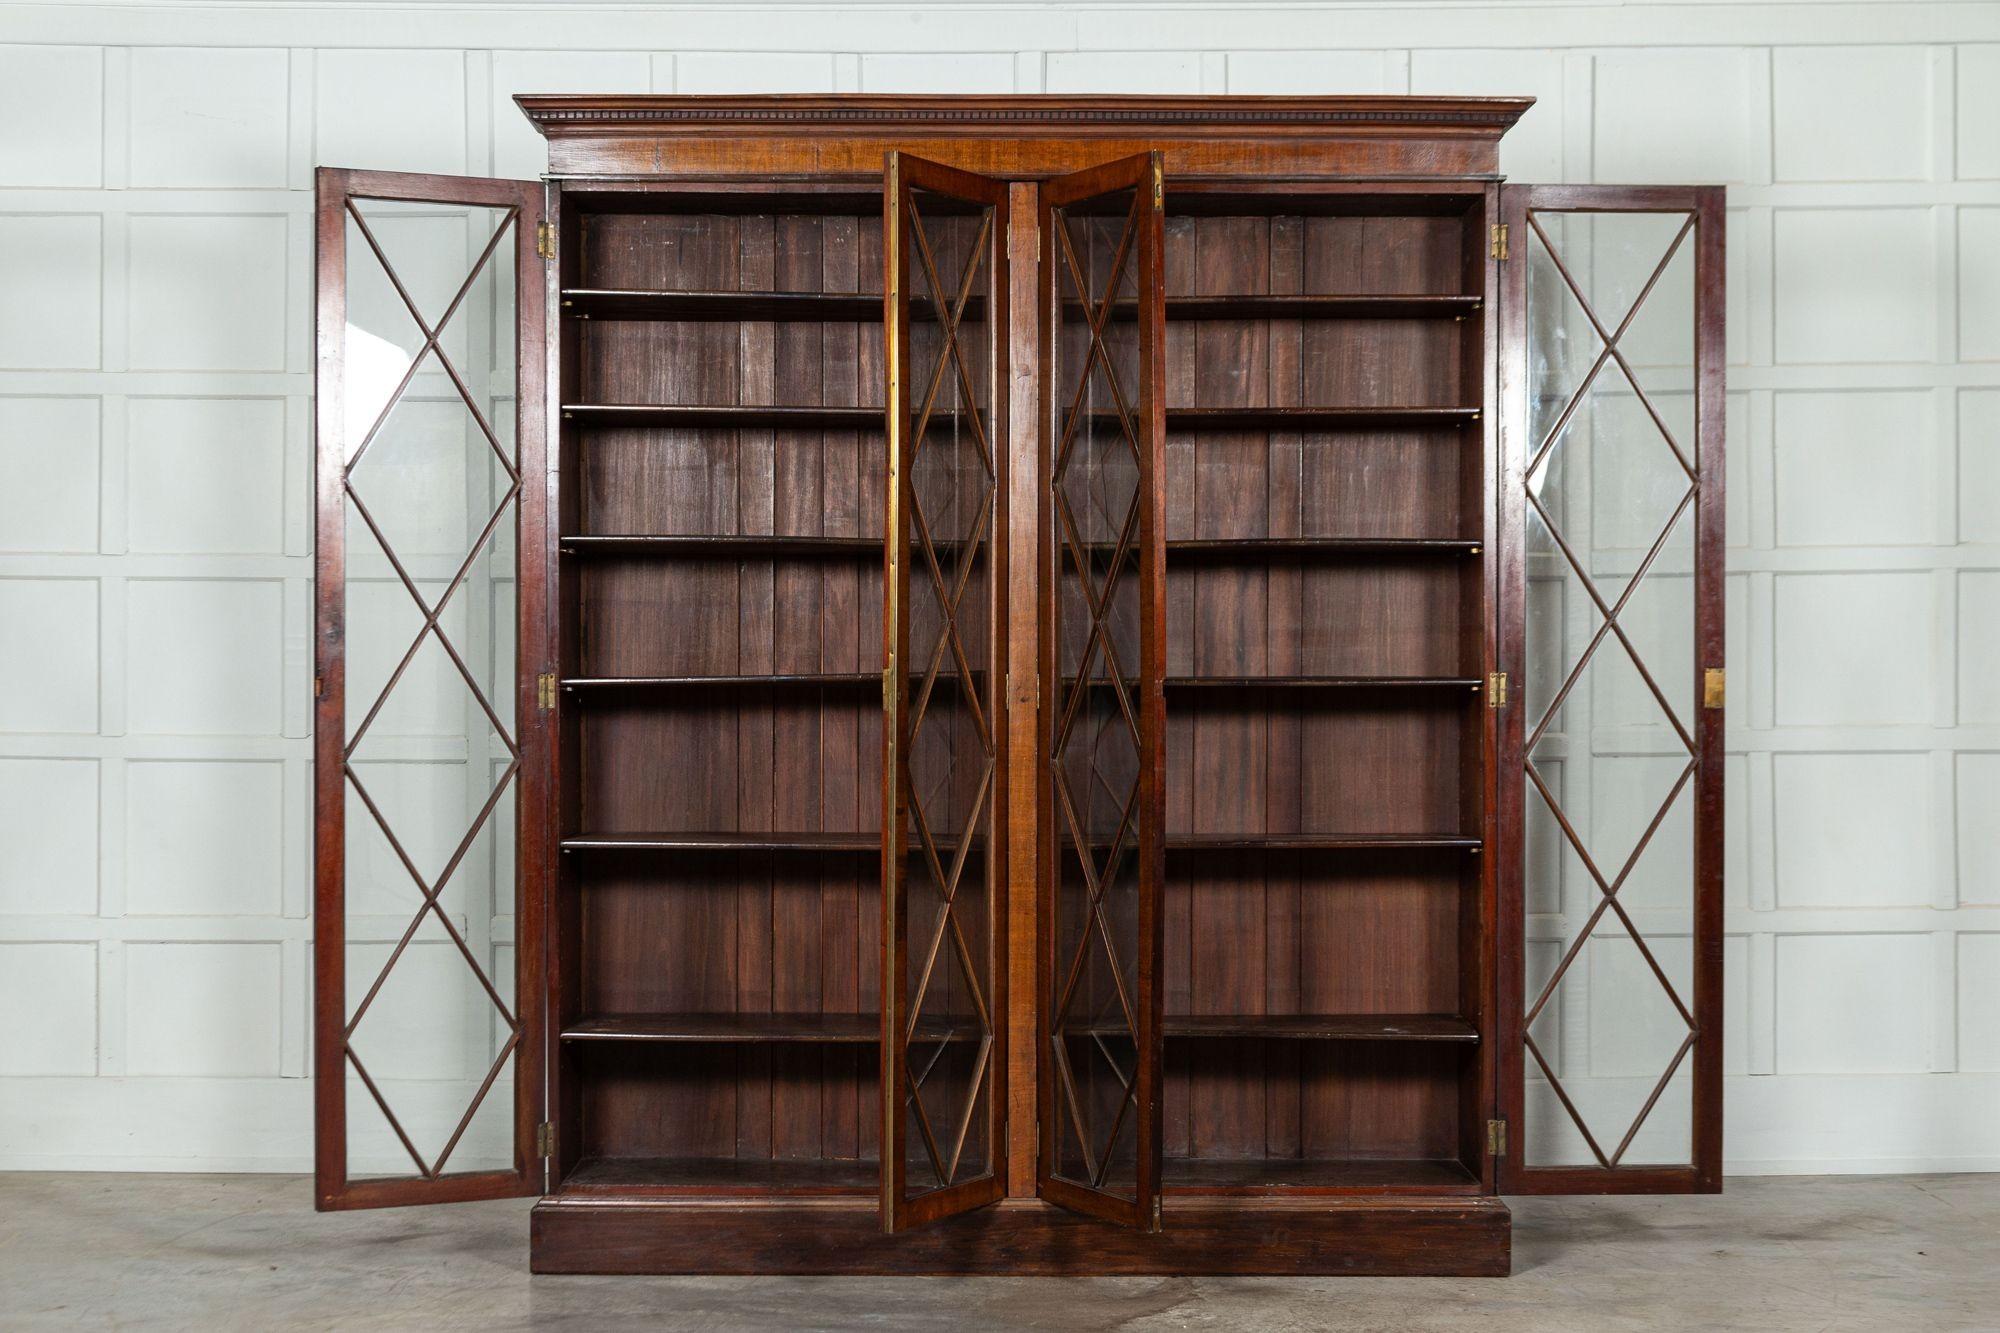 circa 1880
sku 1547
Large English 19thC Mahogany Astral Glazed Bookcase / Display Cabinet
W188 x D42 x H217cm